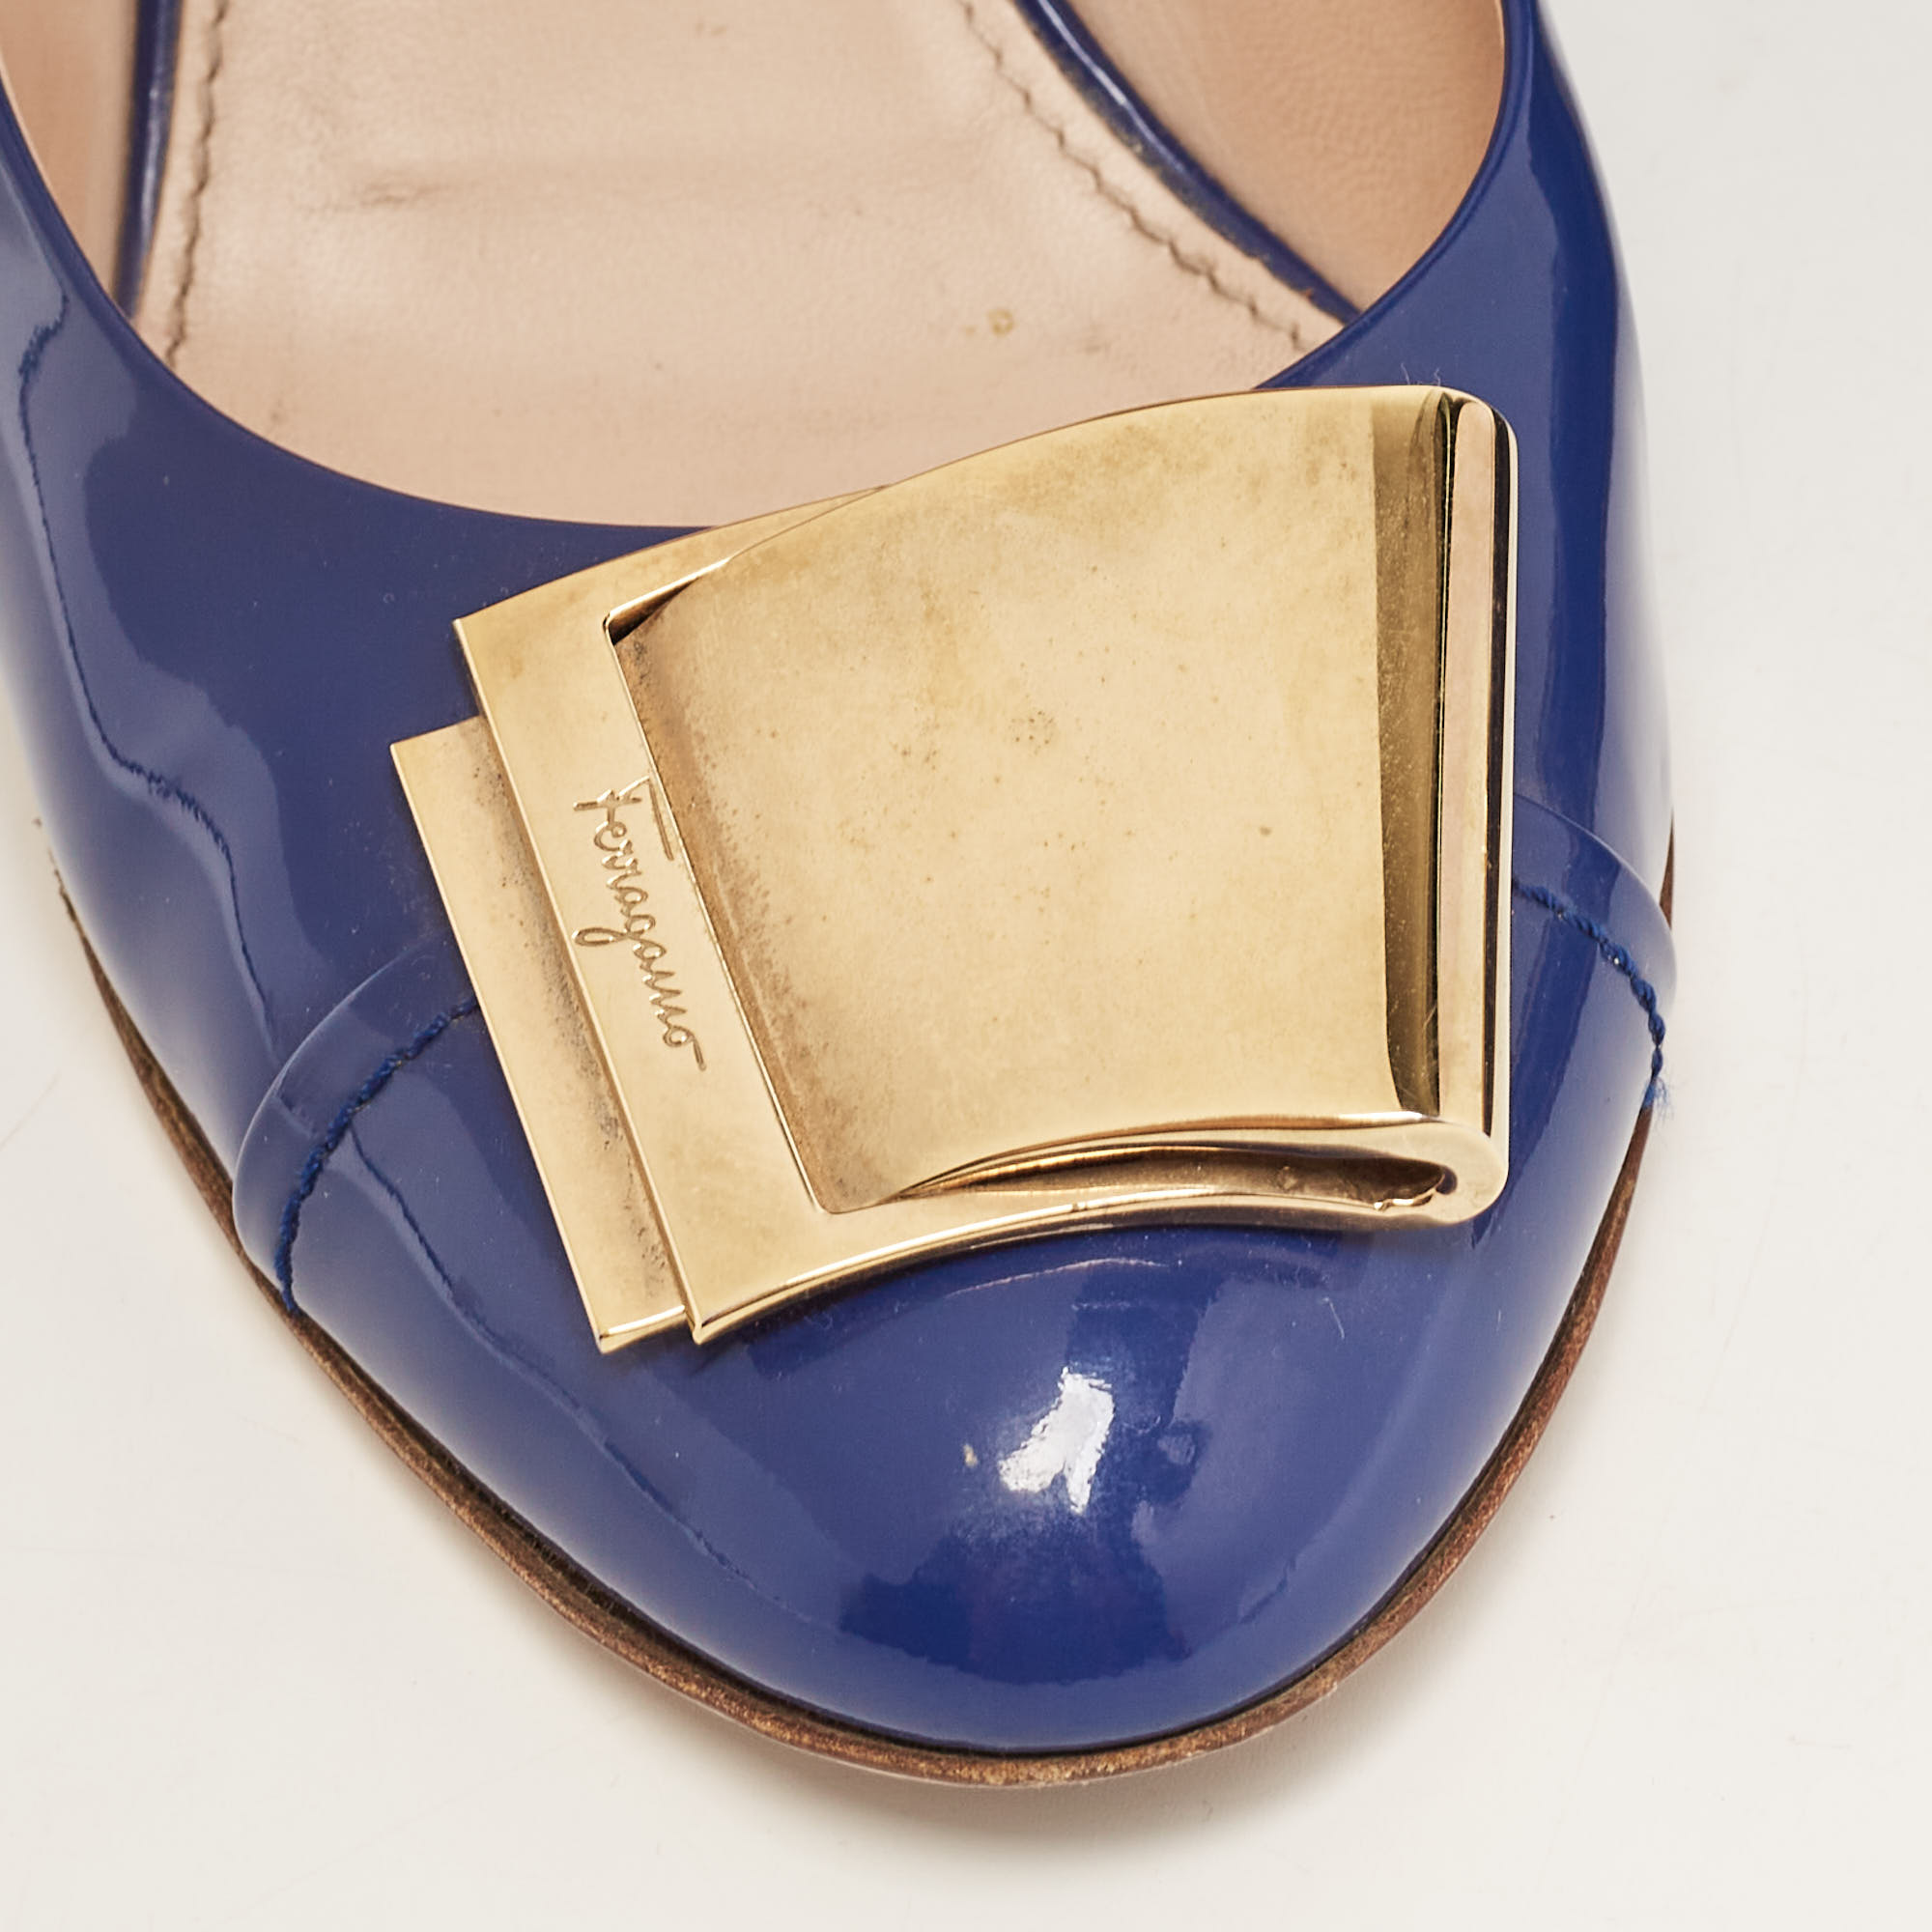 Salvatore Ferragamo Blue Patent Leather Block Heel Pumps Size 39.5